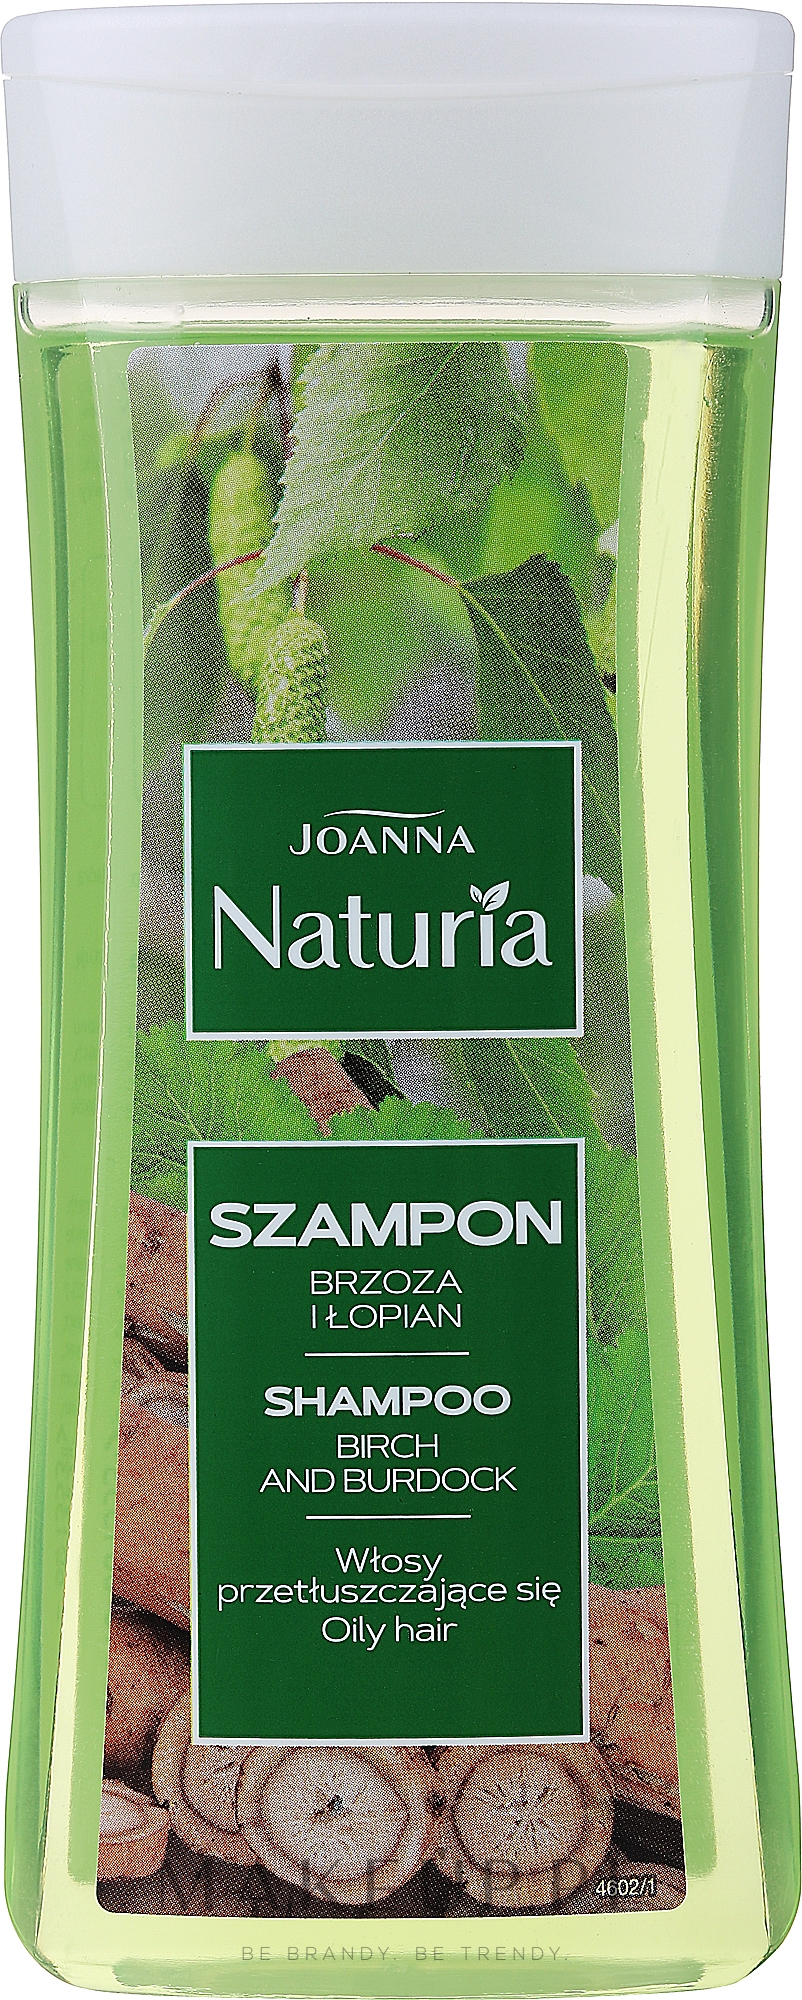 szampon joanna zielona herbata